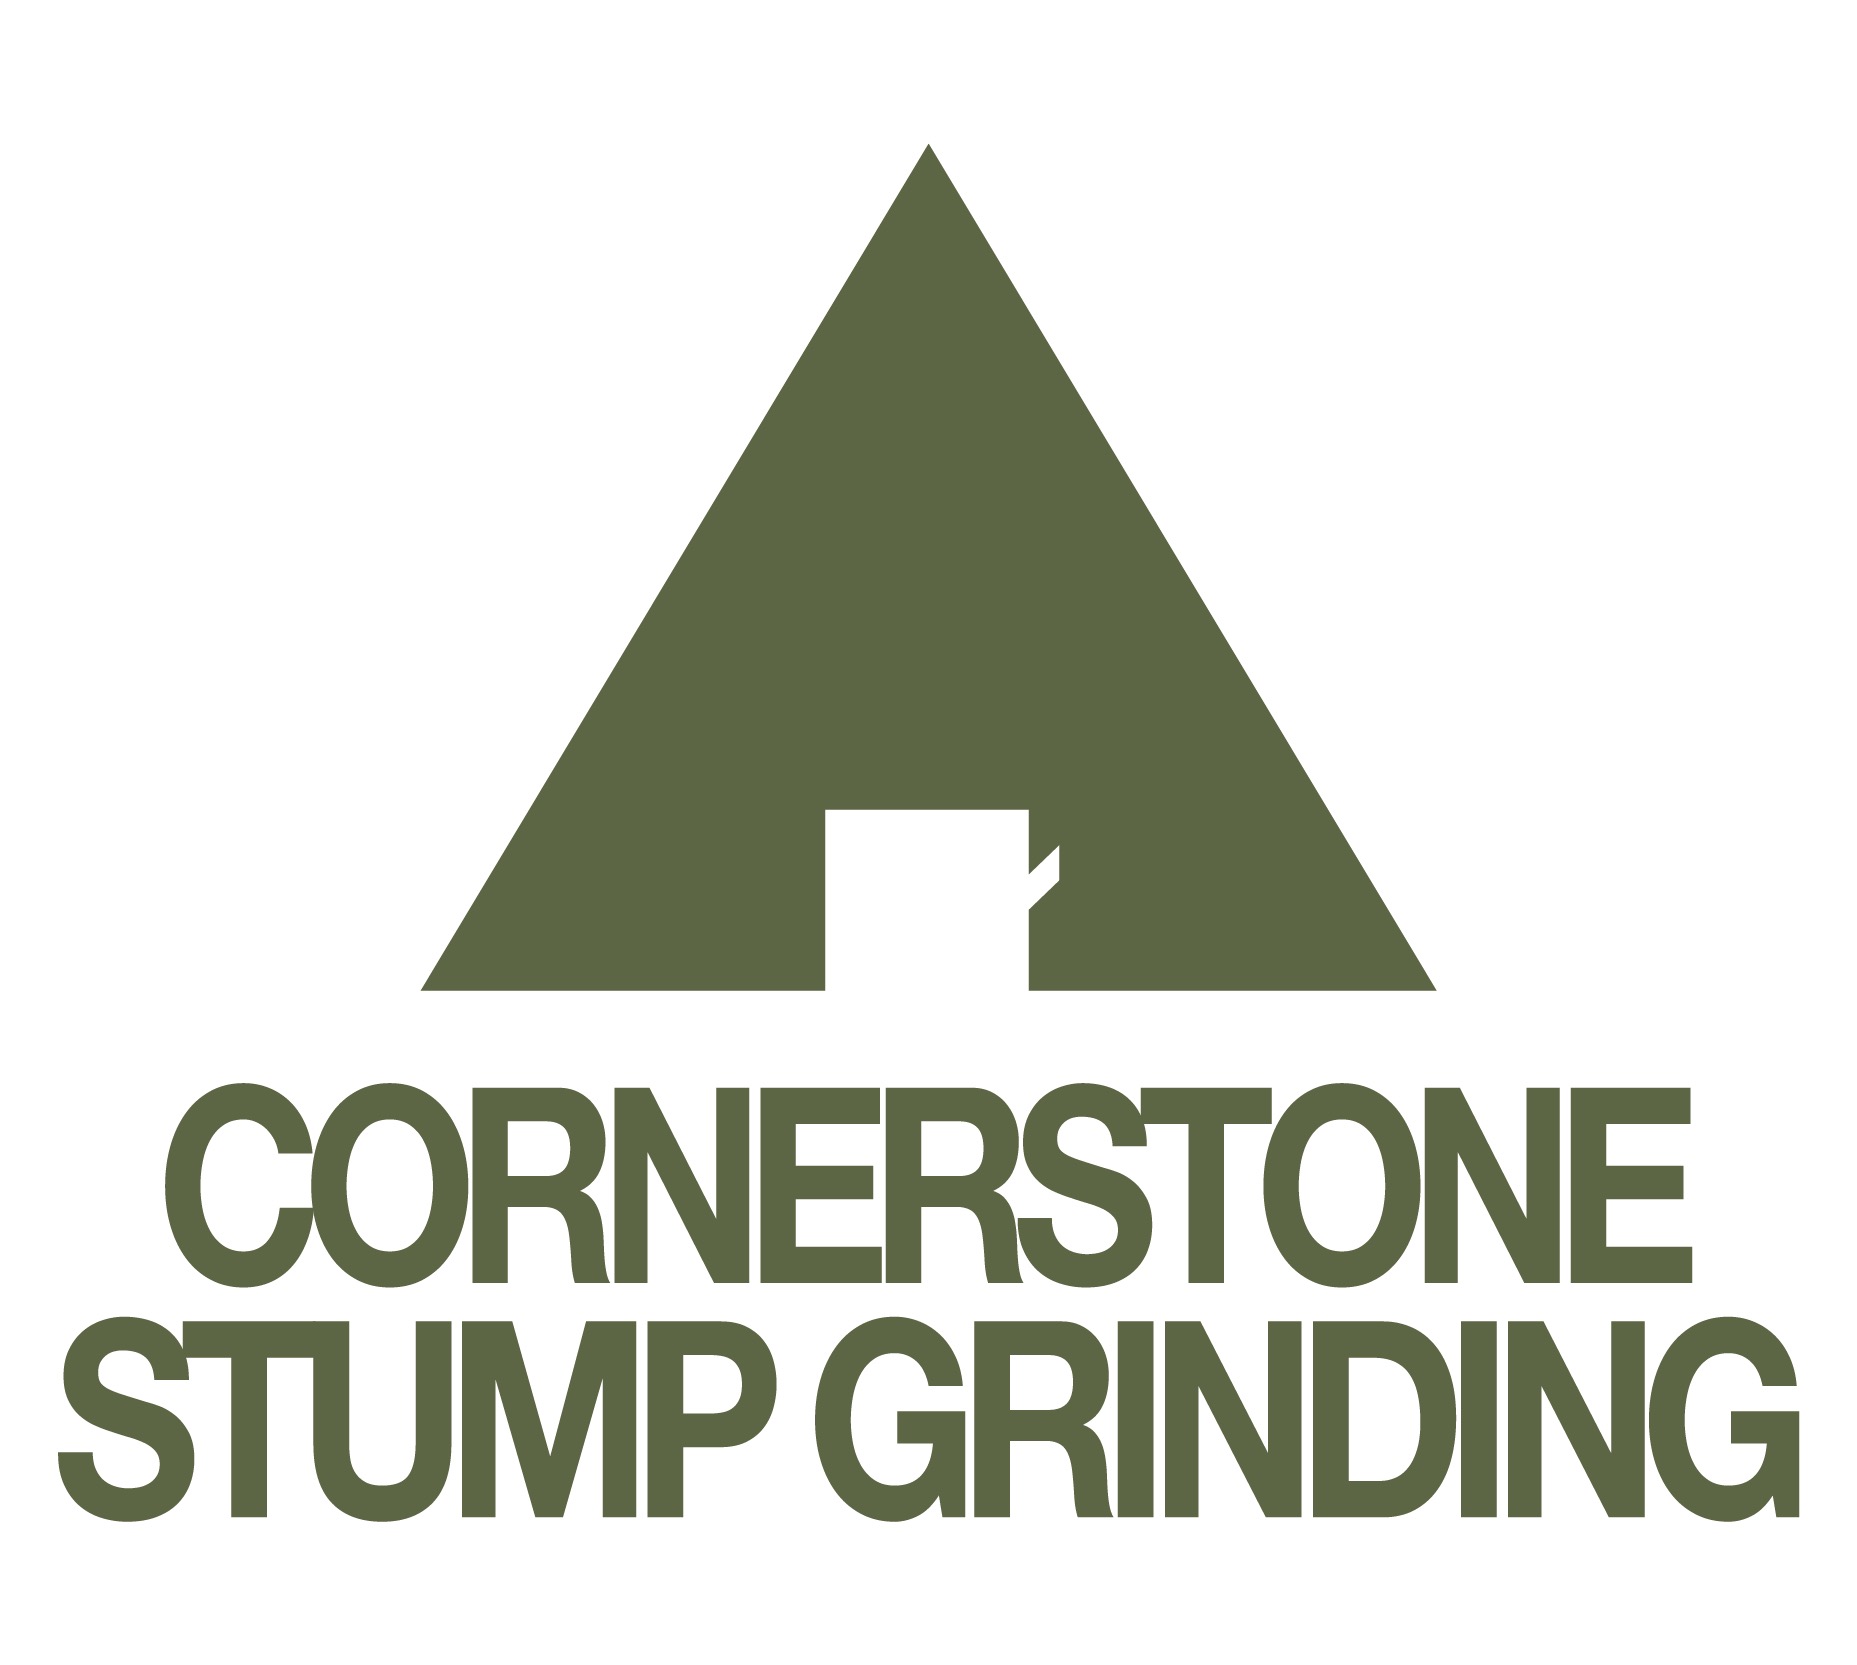 Cornerstone Stump Grinding